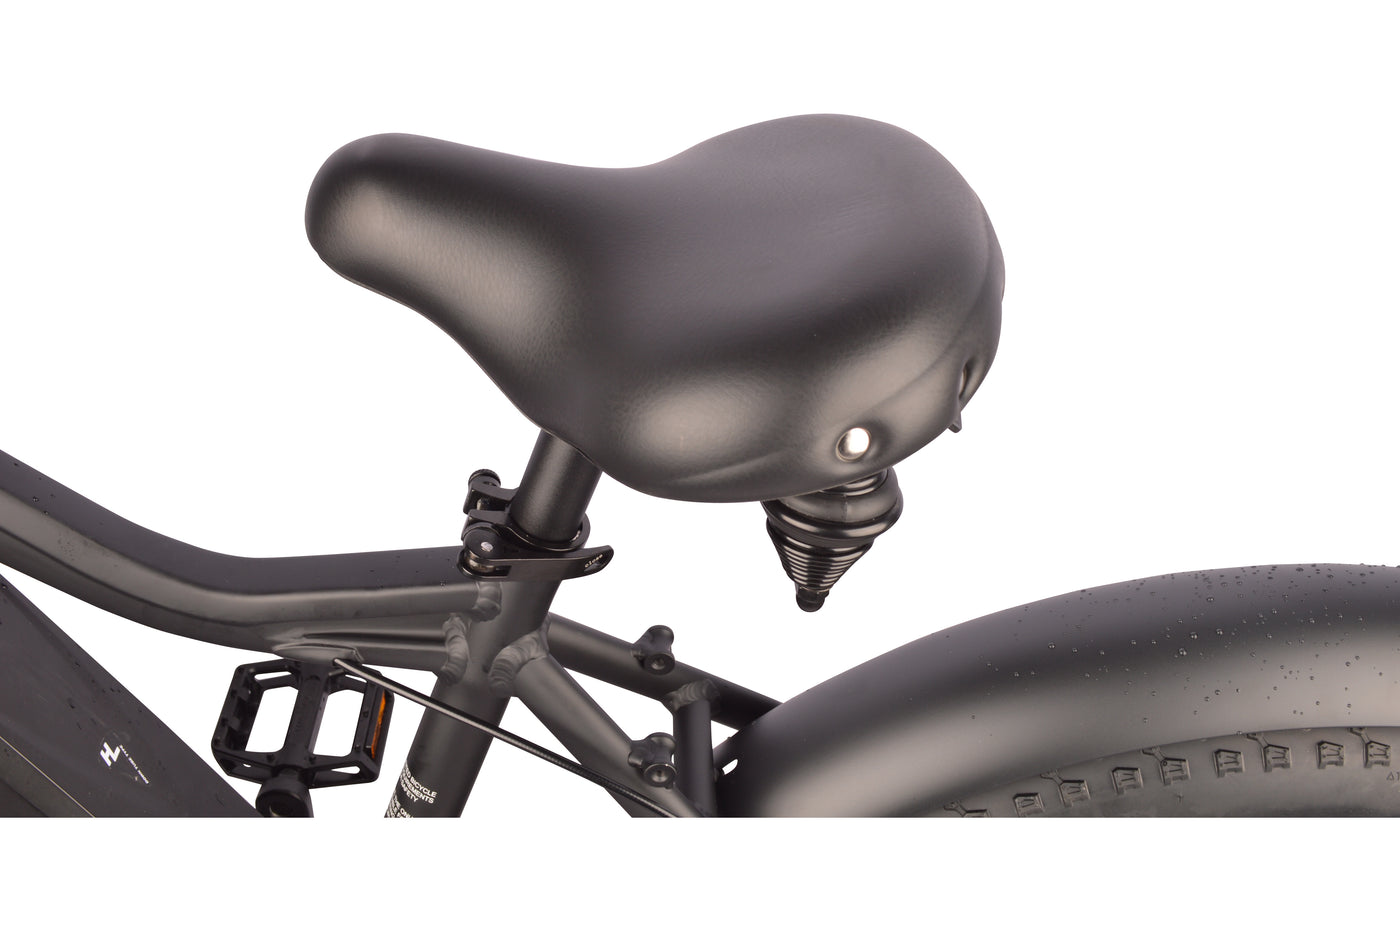 DJ Fat Bike has a quick release shock absorbing adjustable seat